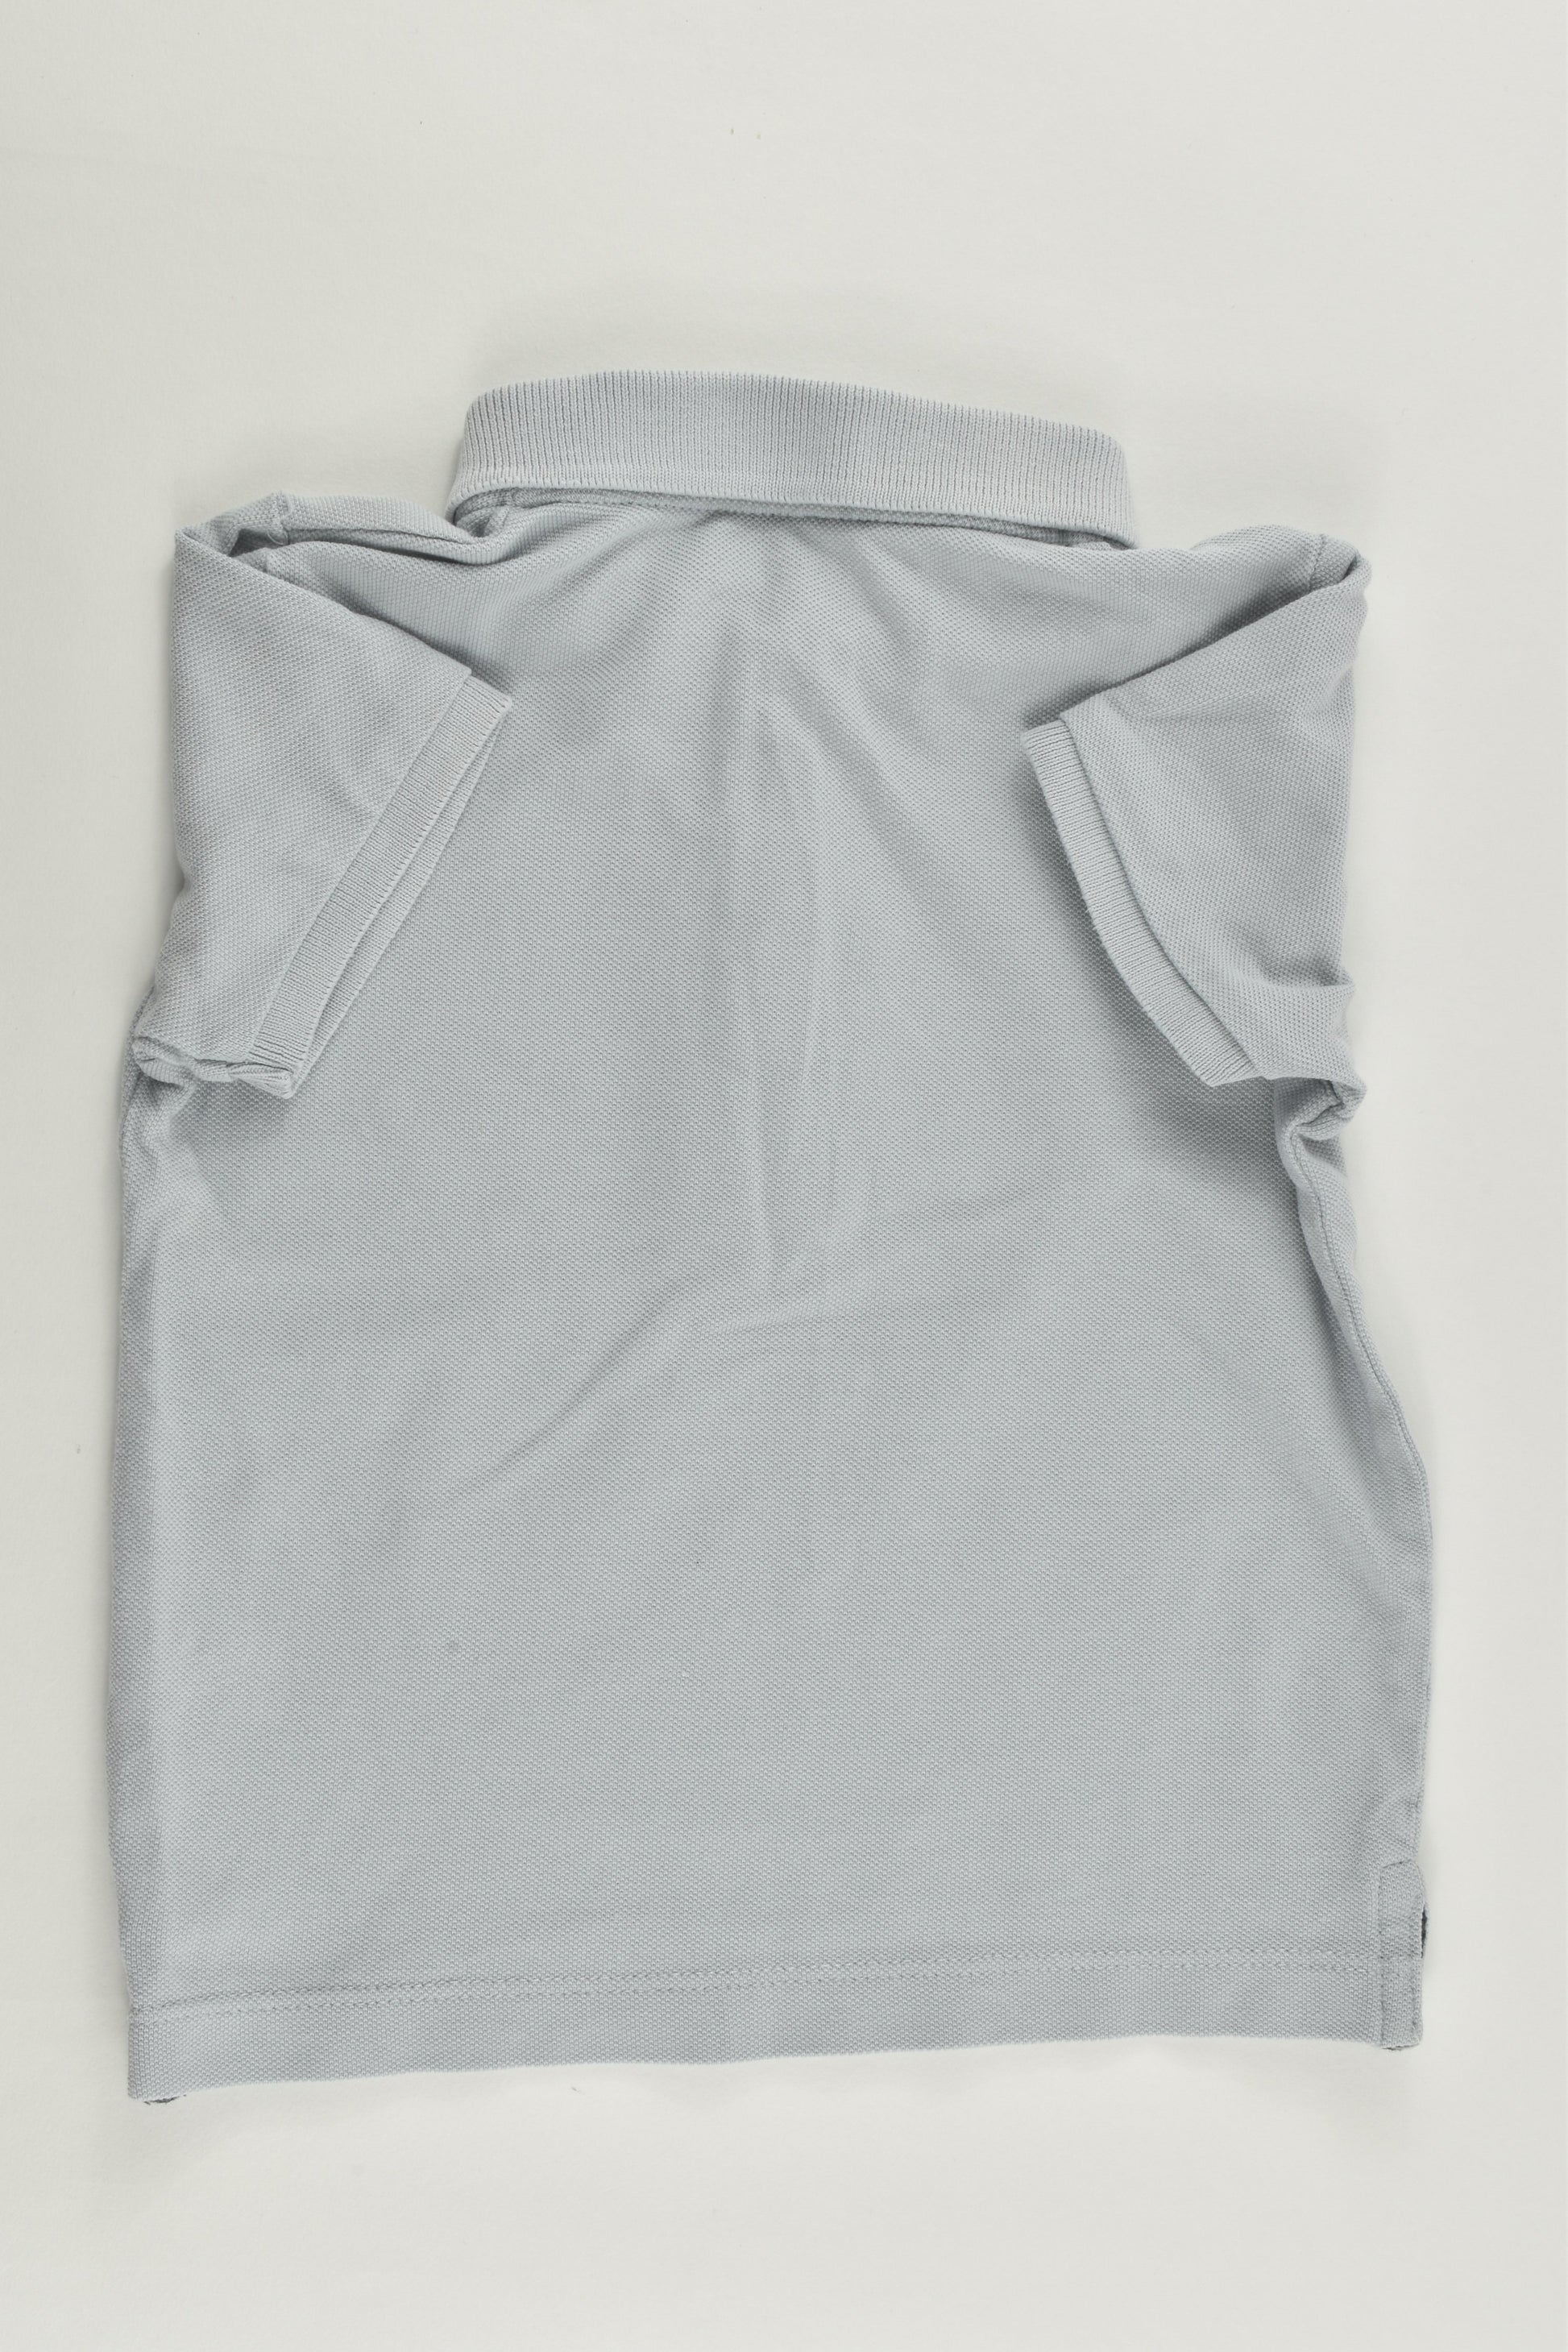 Bout'Chou (France) Size 0 (12 months, 74 cm) Polo Shirt